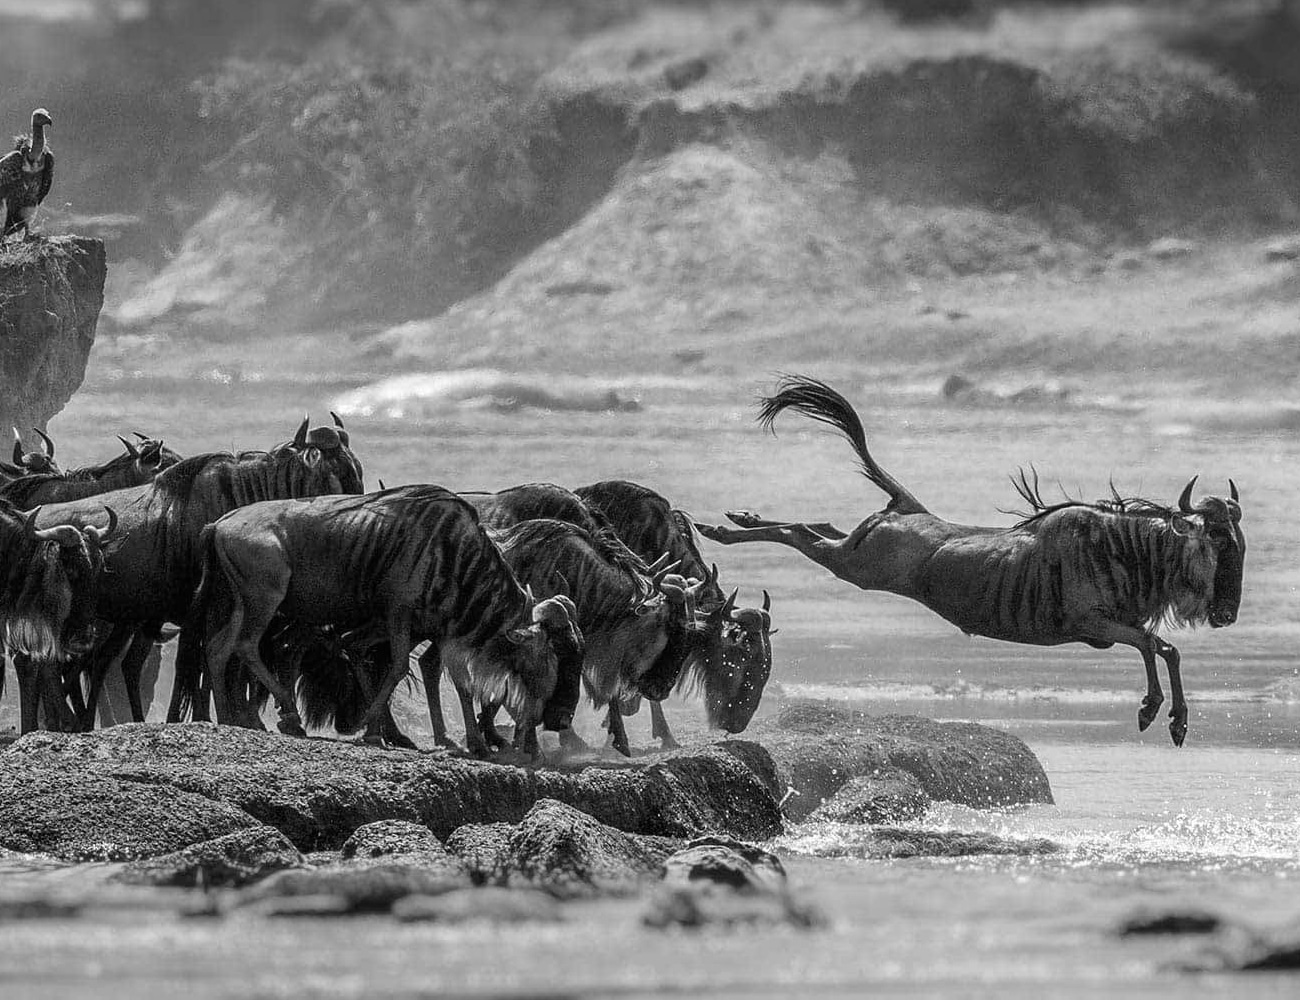 Wildlife at the Serengeti National Park